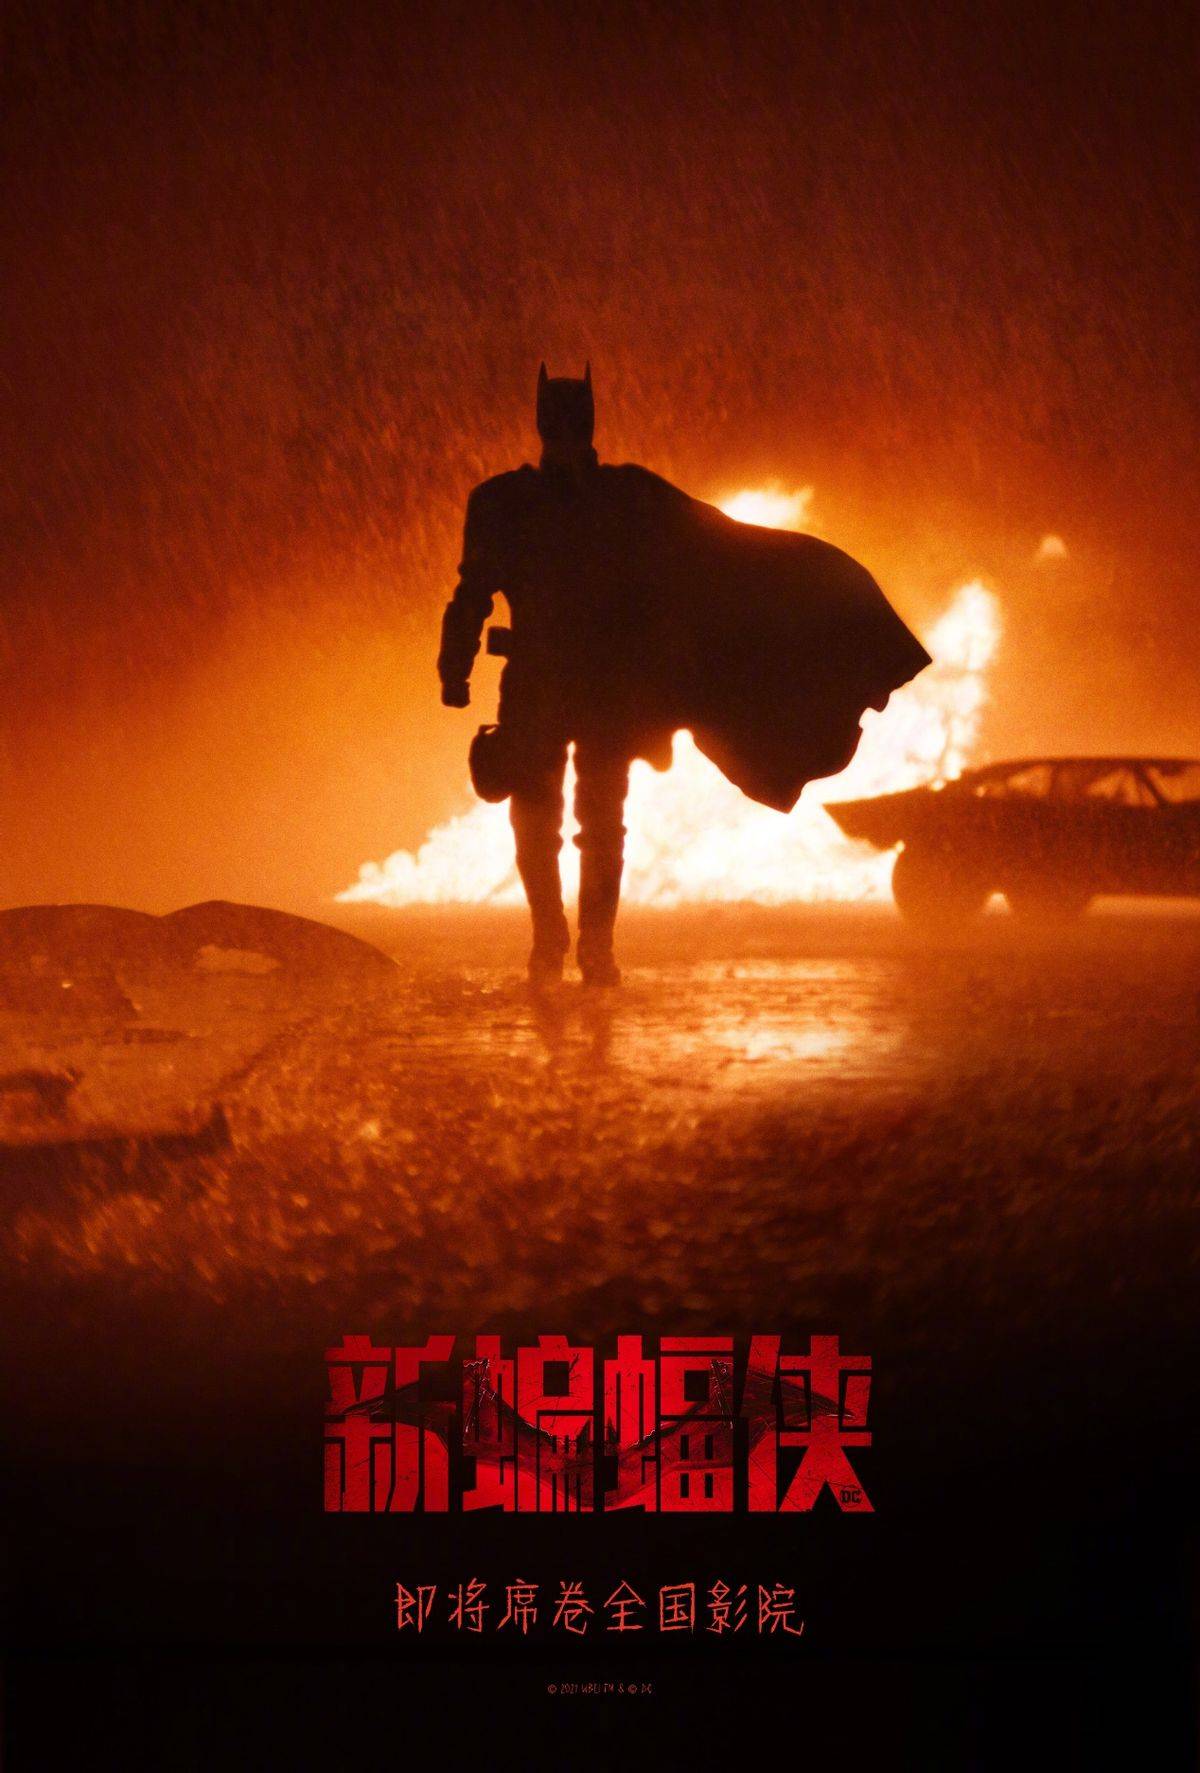 dc最新电影《新蝙蝠侠》确认将引进中国内地，你期待吗？